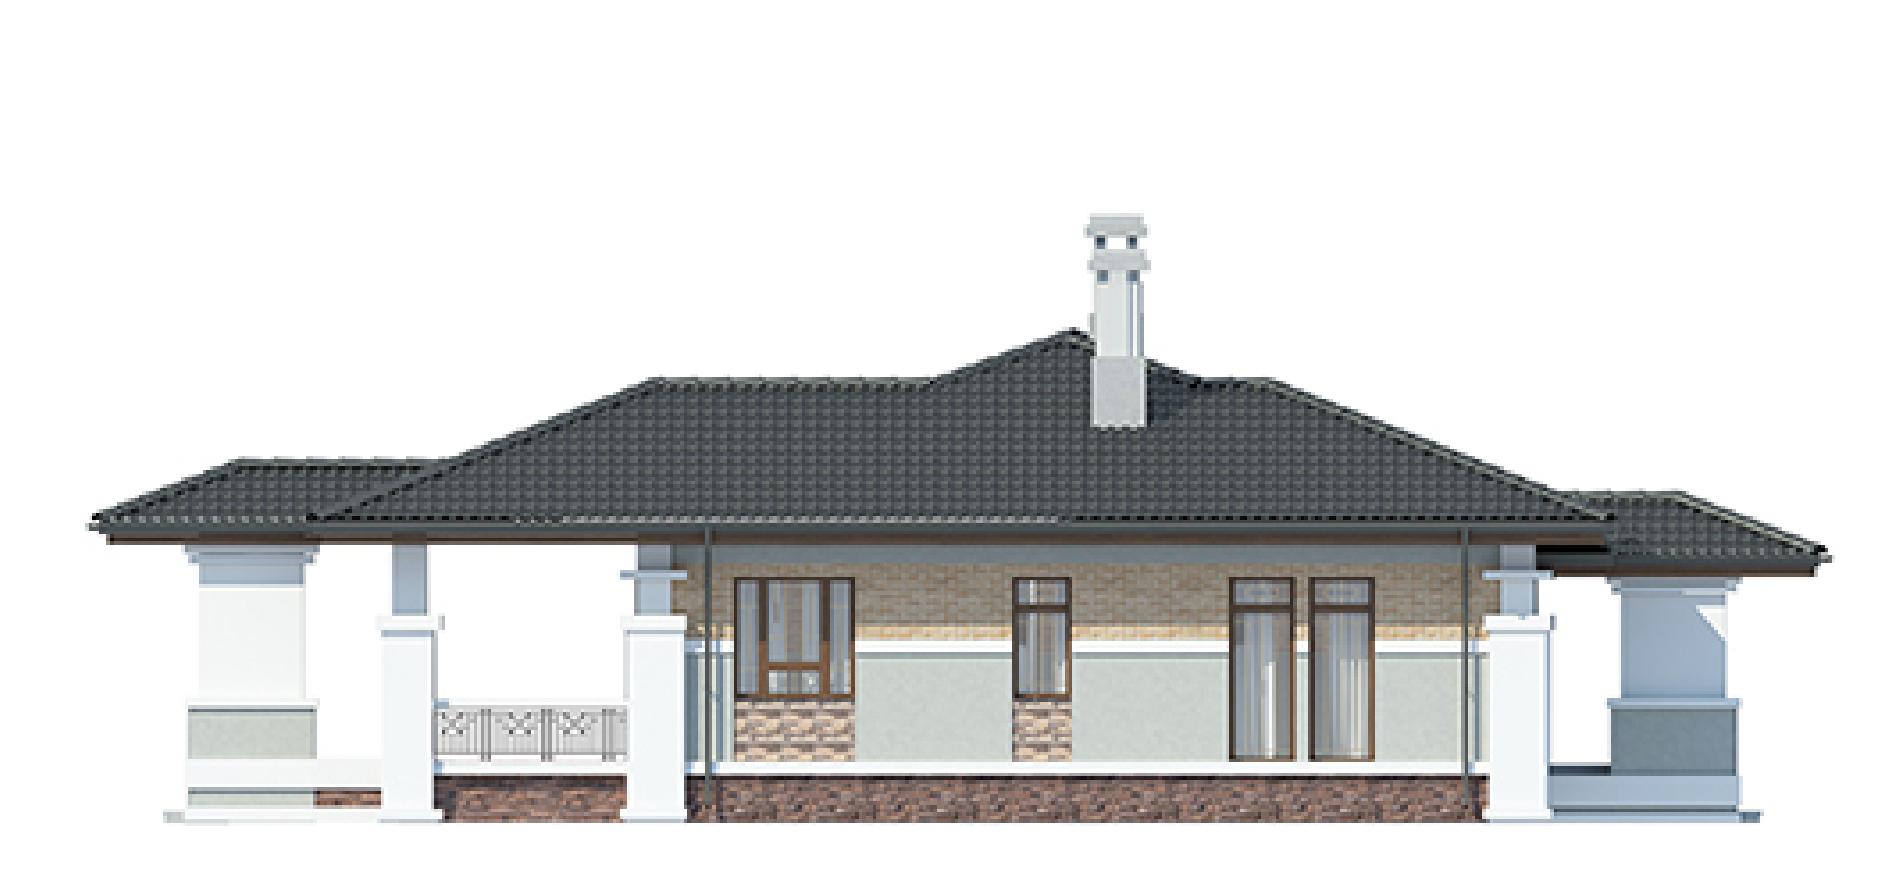 Фасады проекта дома №cp-91-12 cp-91-12_f1.jpg